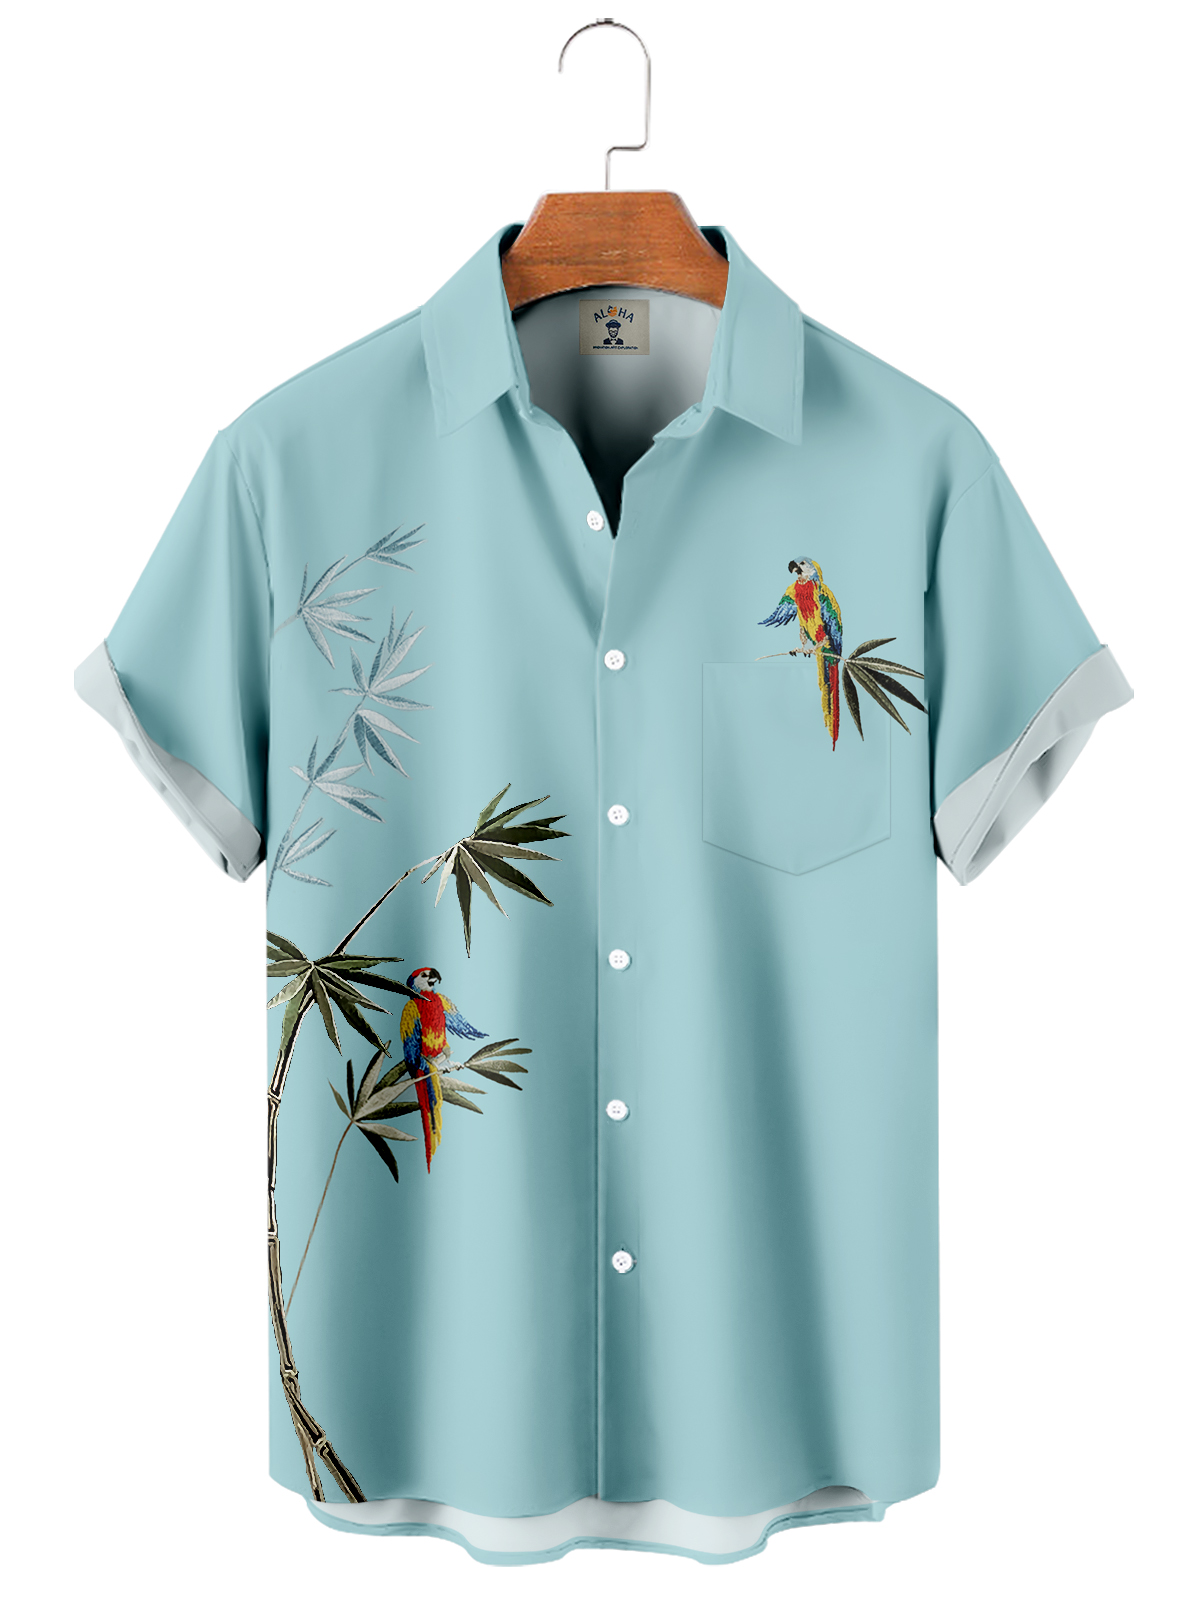 Men's Simple Hawaiian Bamboo and Parrot Print Short Sleeve Shirt-Garamode